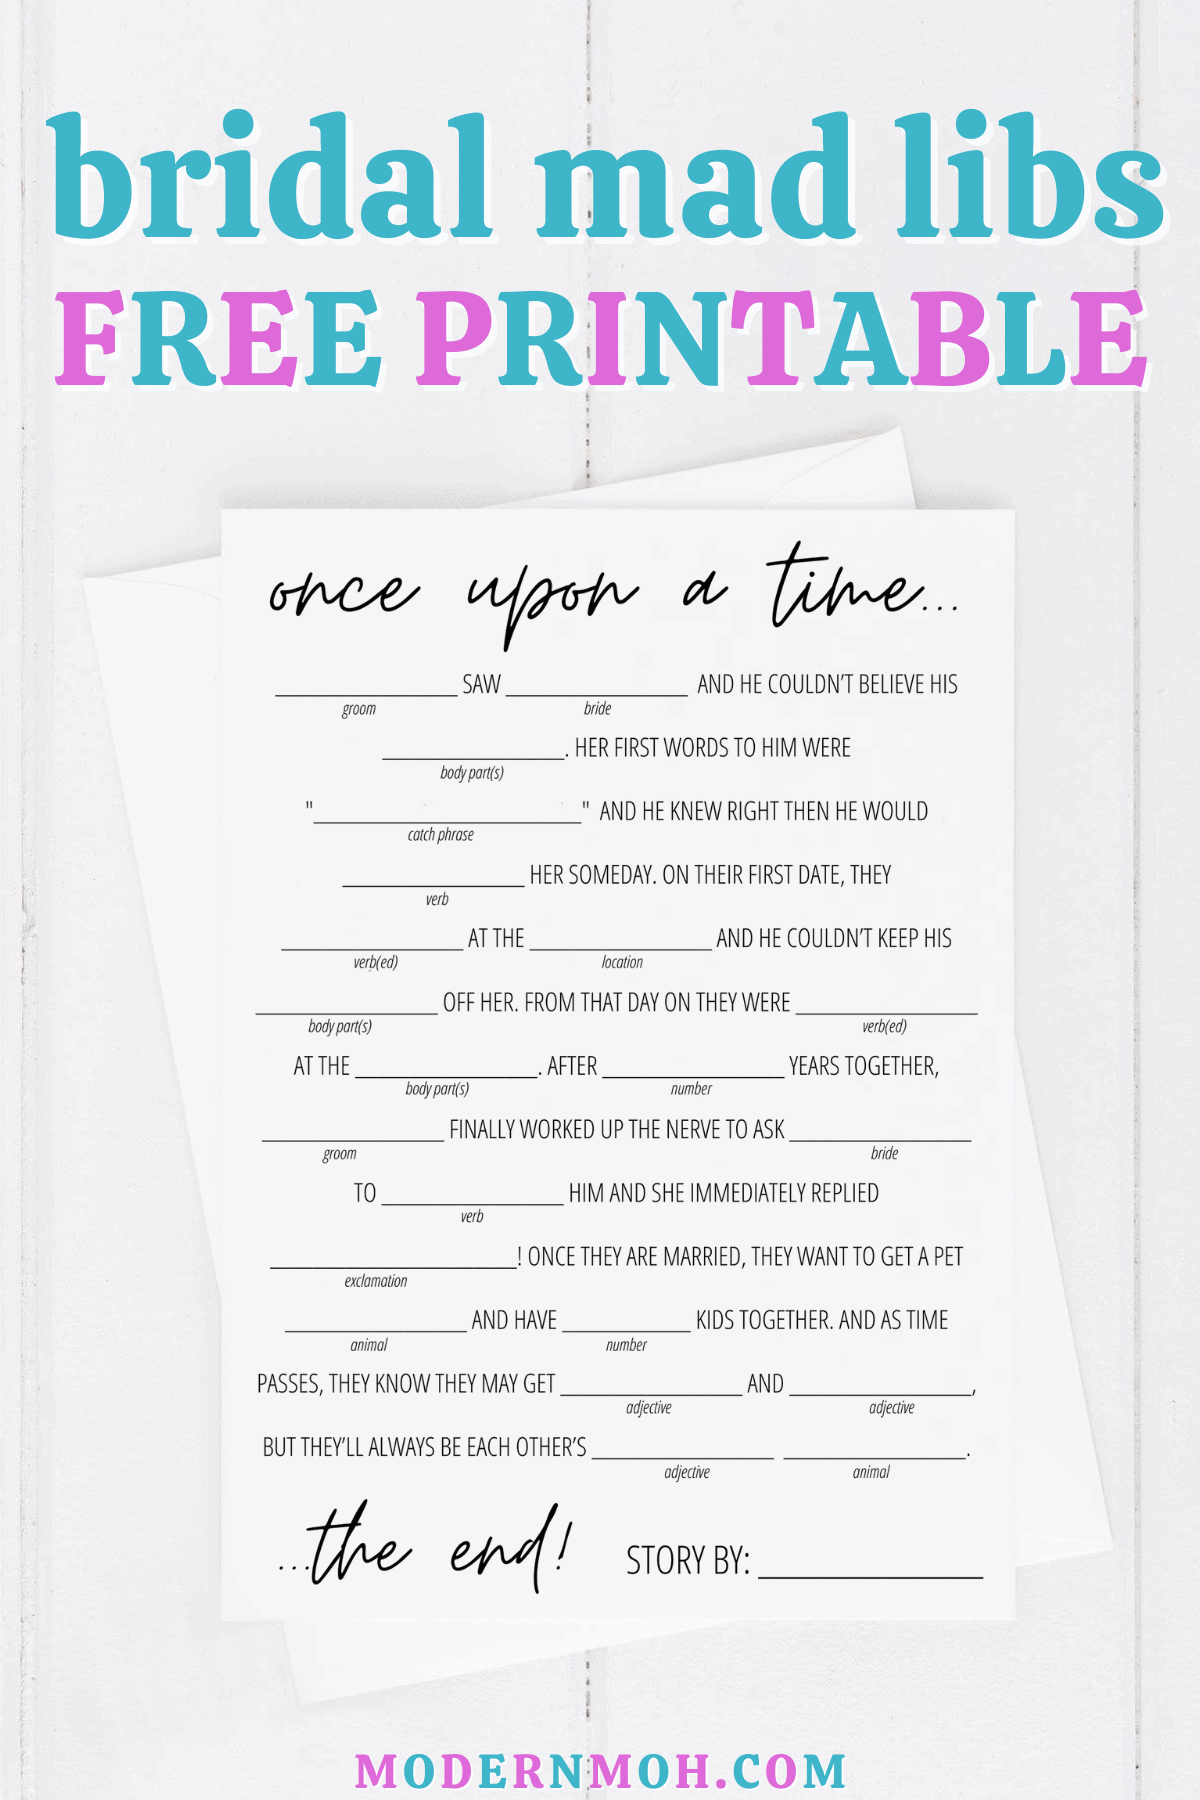 Bridal Shower Mad Libs Free Printable